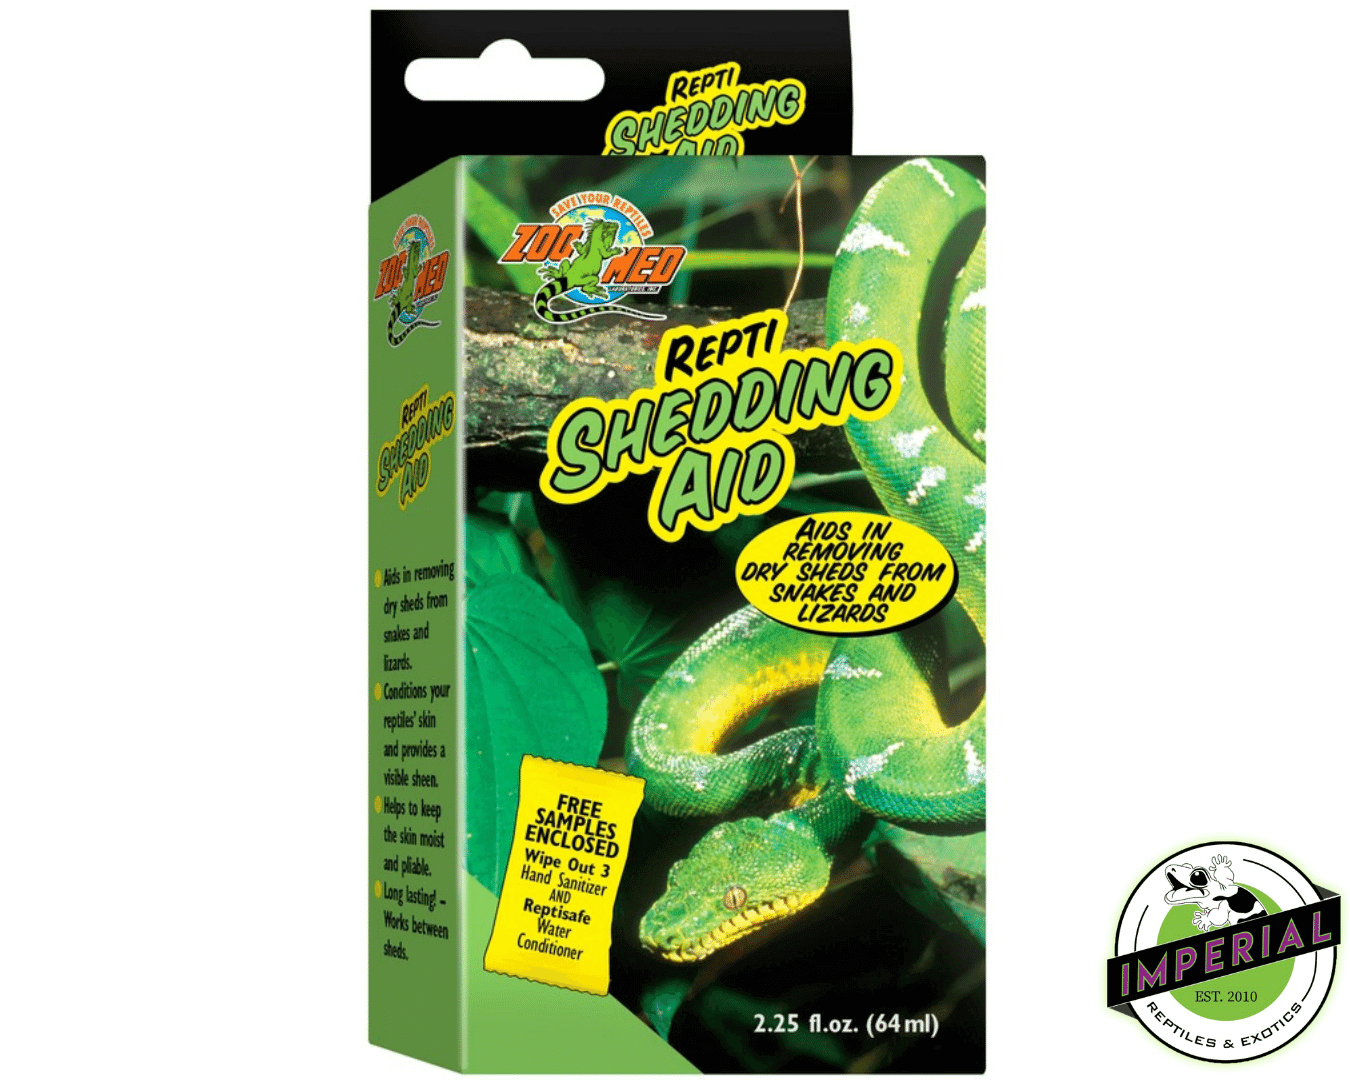 reptile shedding spray for sale online, buy cheap reptile supplies near me